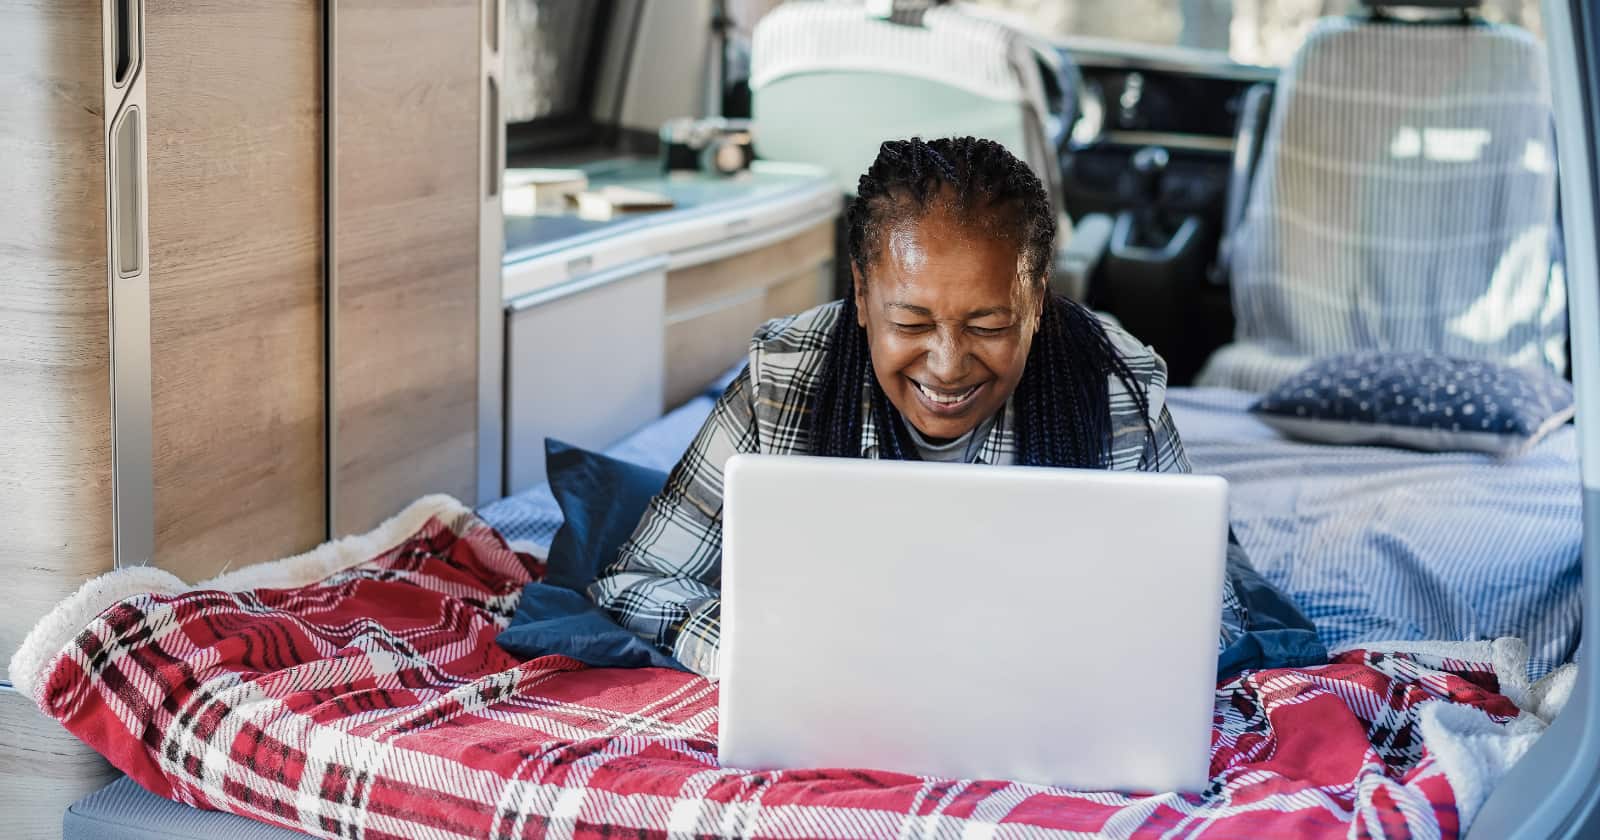 Solo senior camper woman having fun inside camper van using laptop computer on her bed